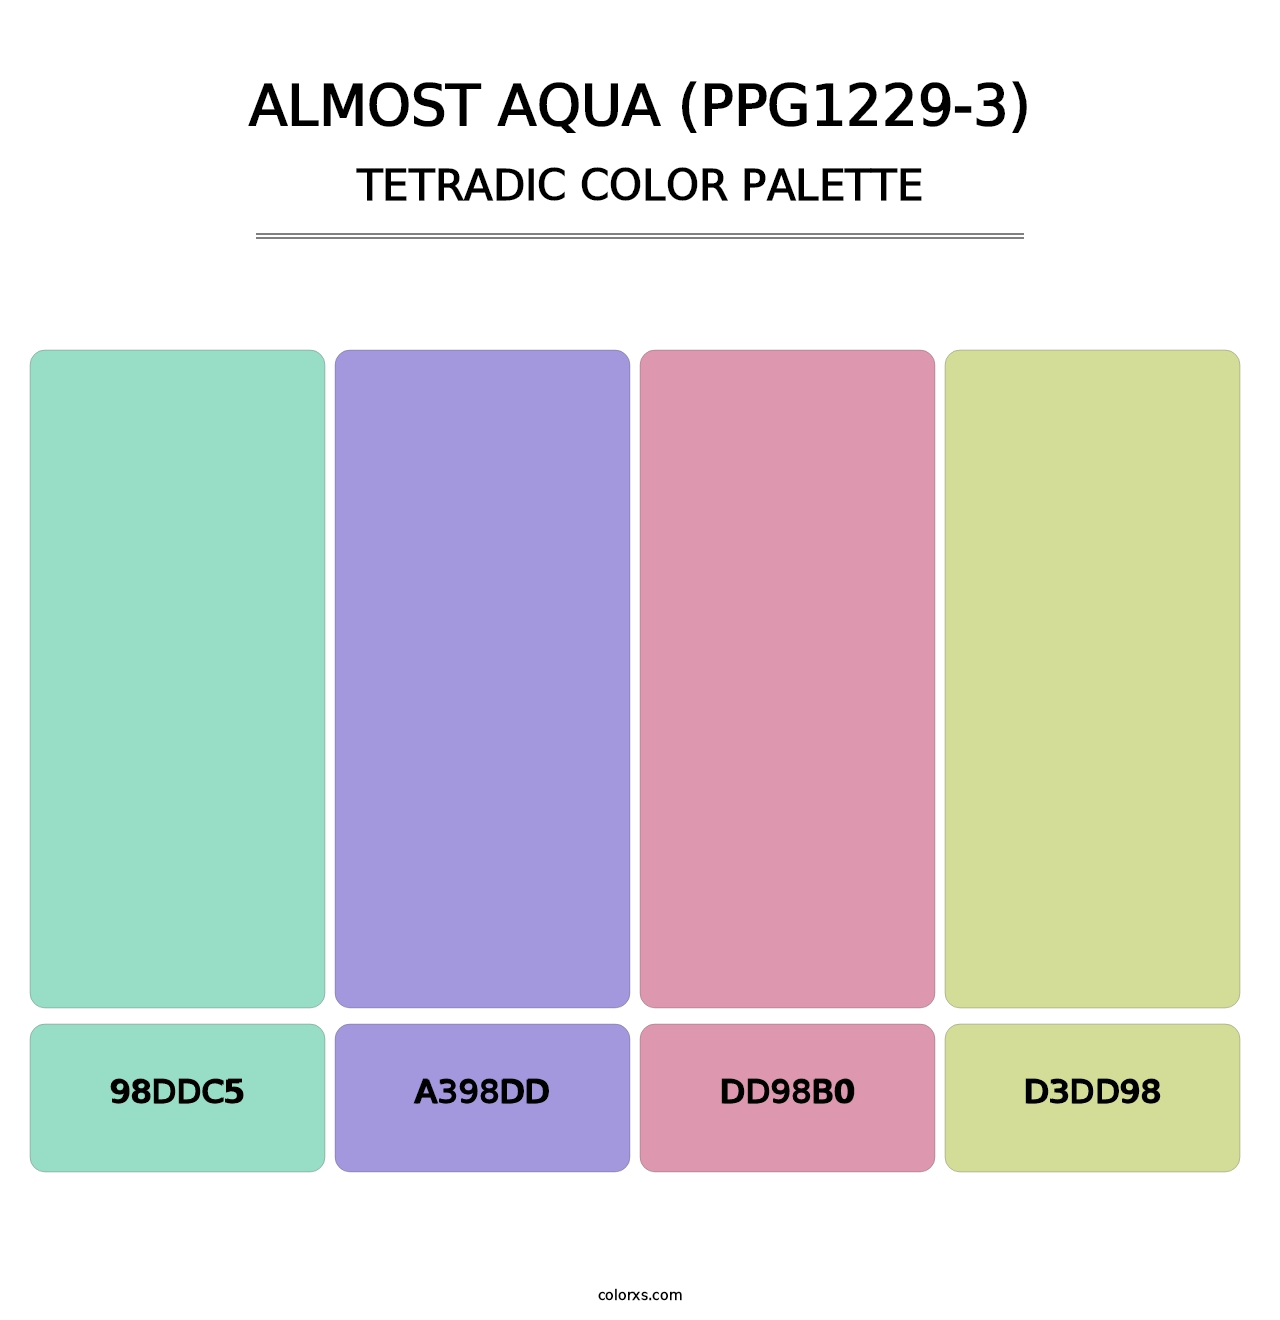 Almost Aqua (PPG1229-3) - Tetradic Color Palette